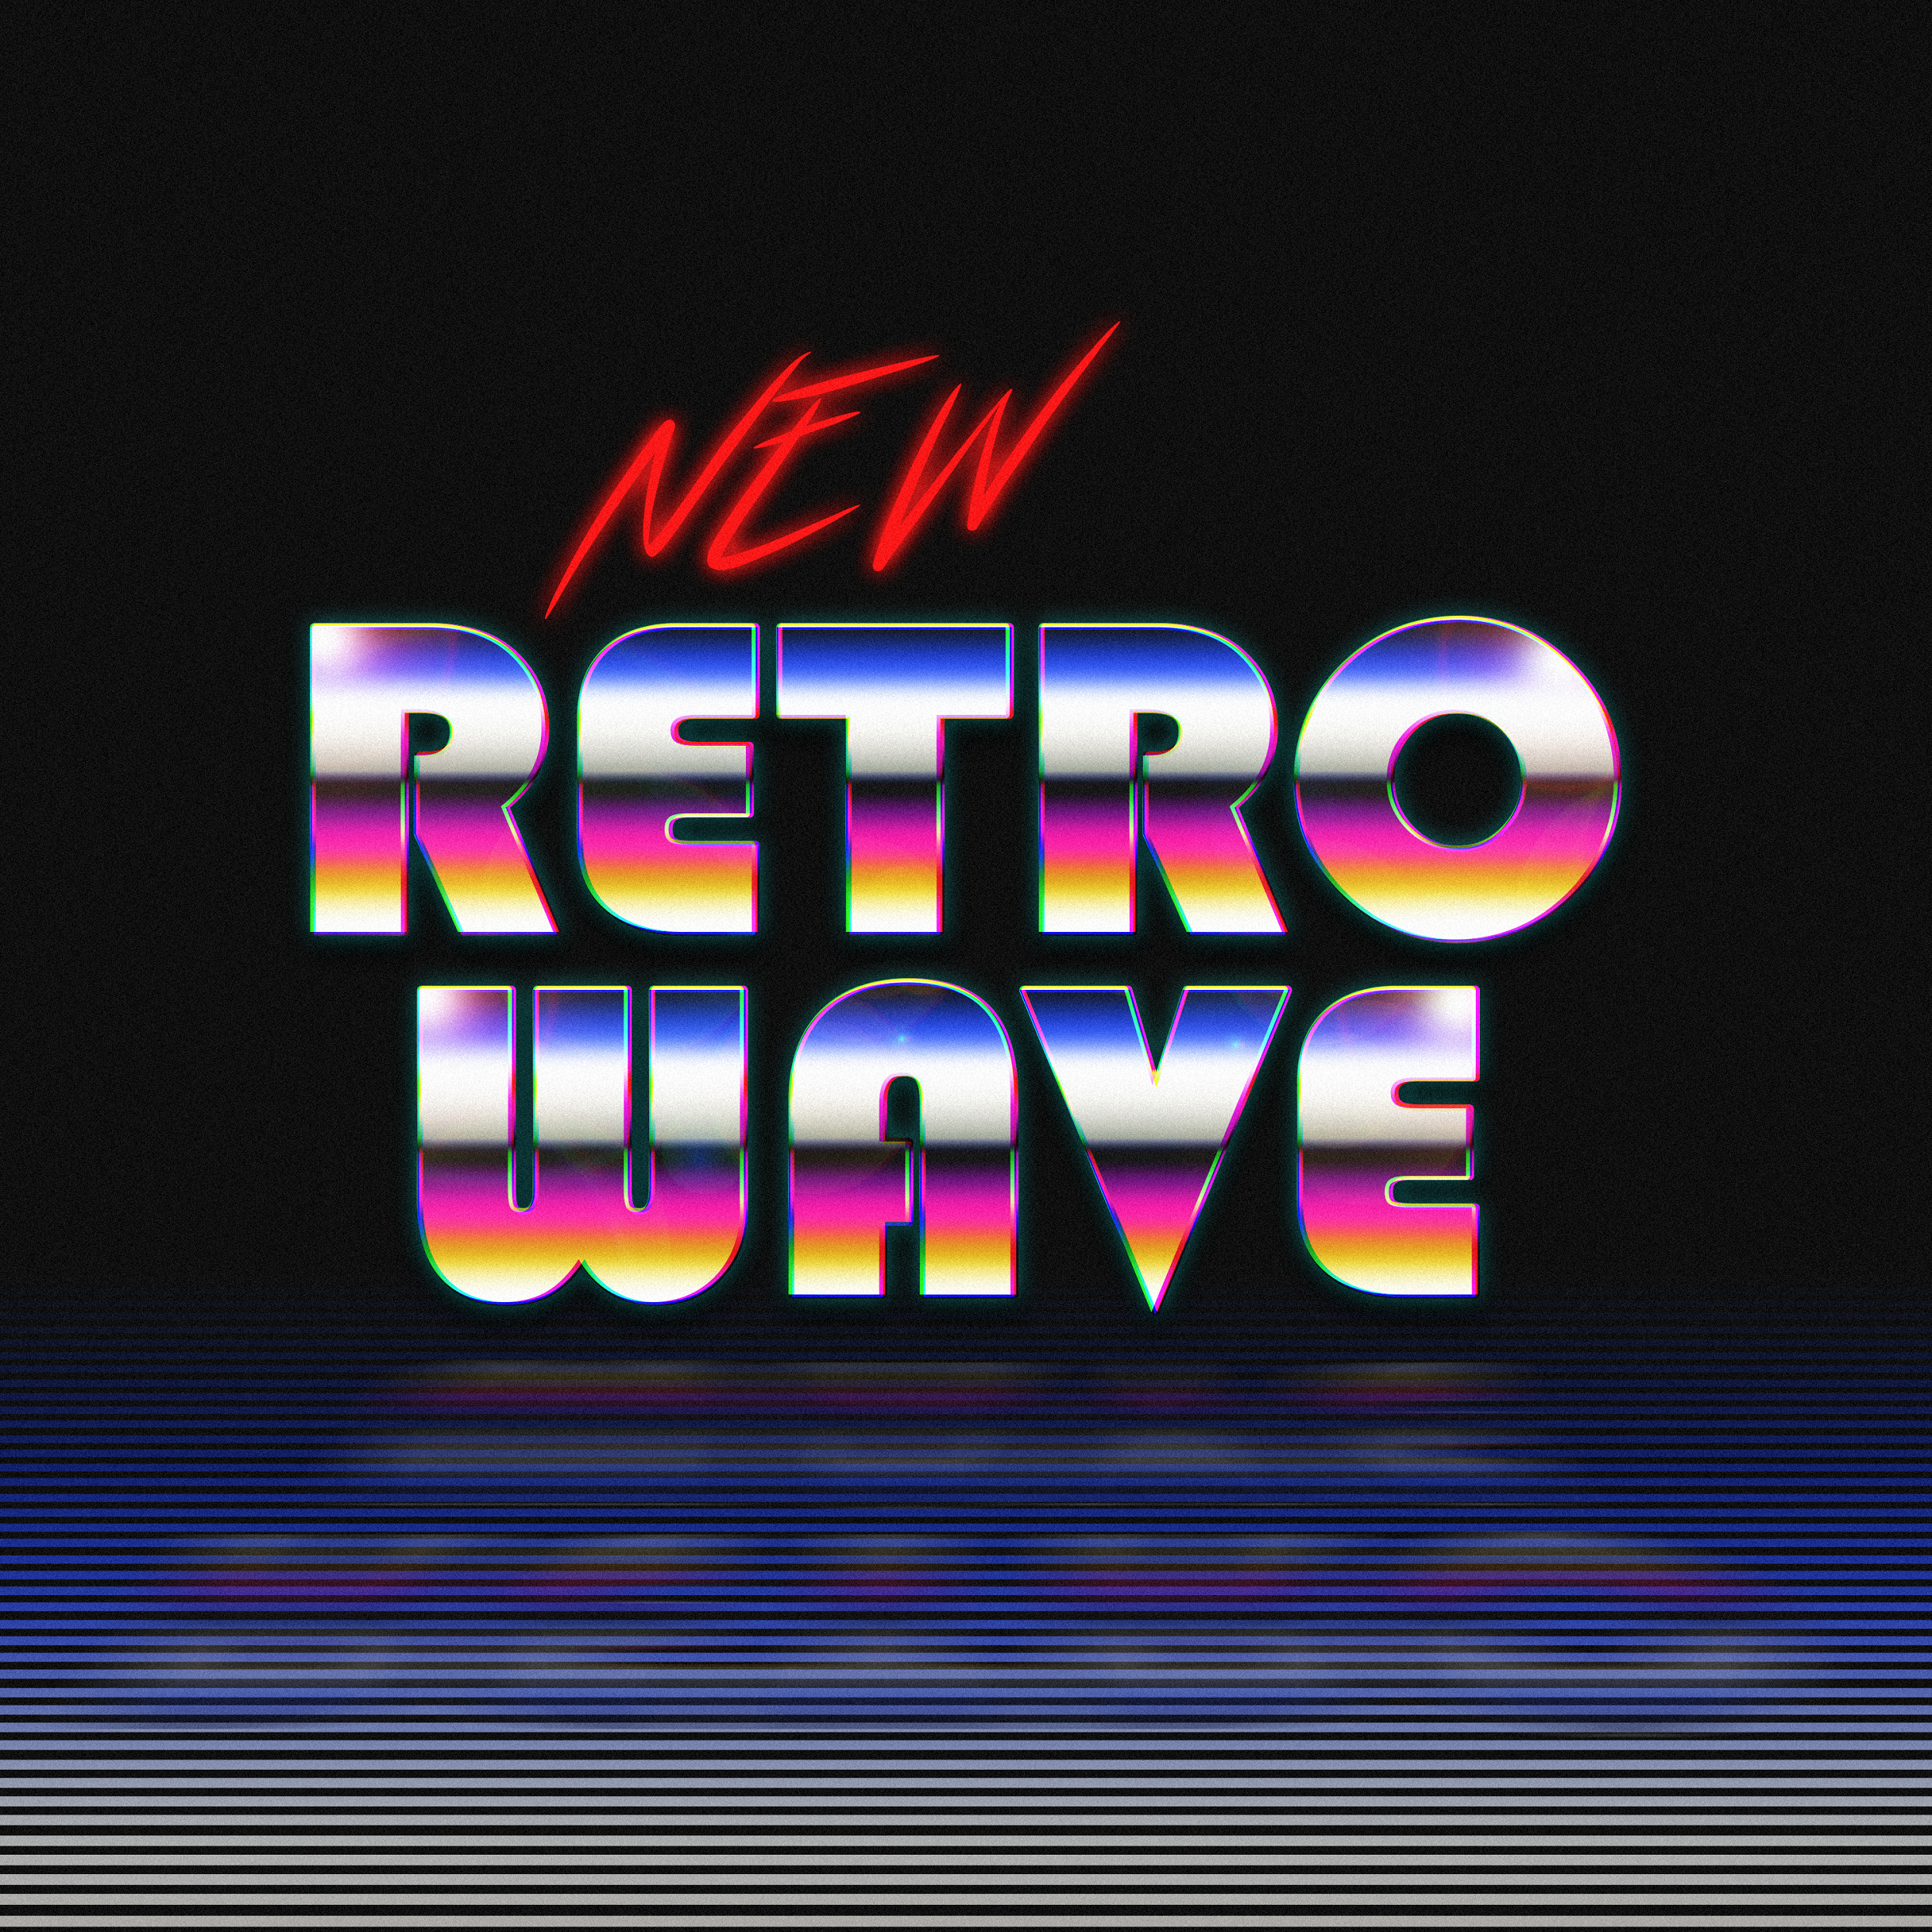 New Retro Wave Typography Digital Art 1980s Neon 2500x2500